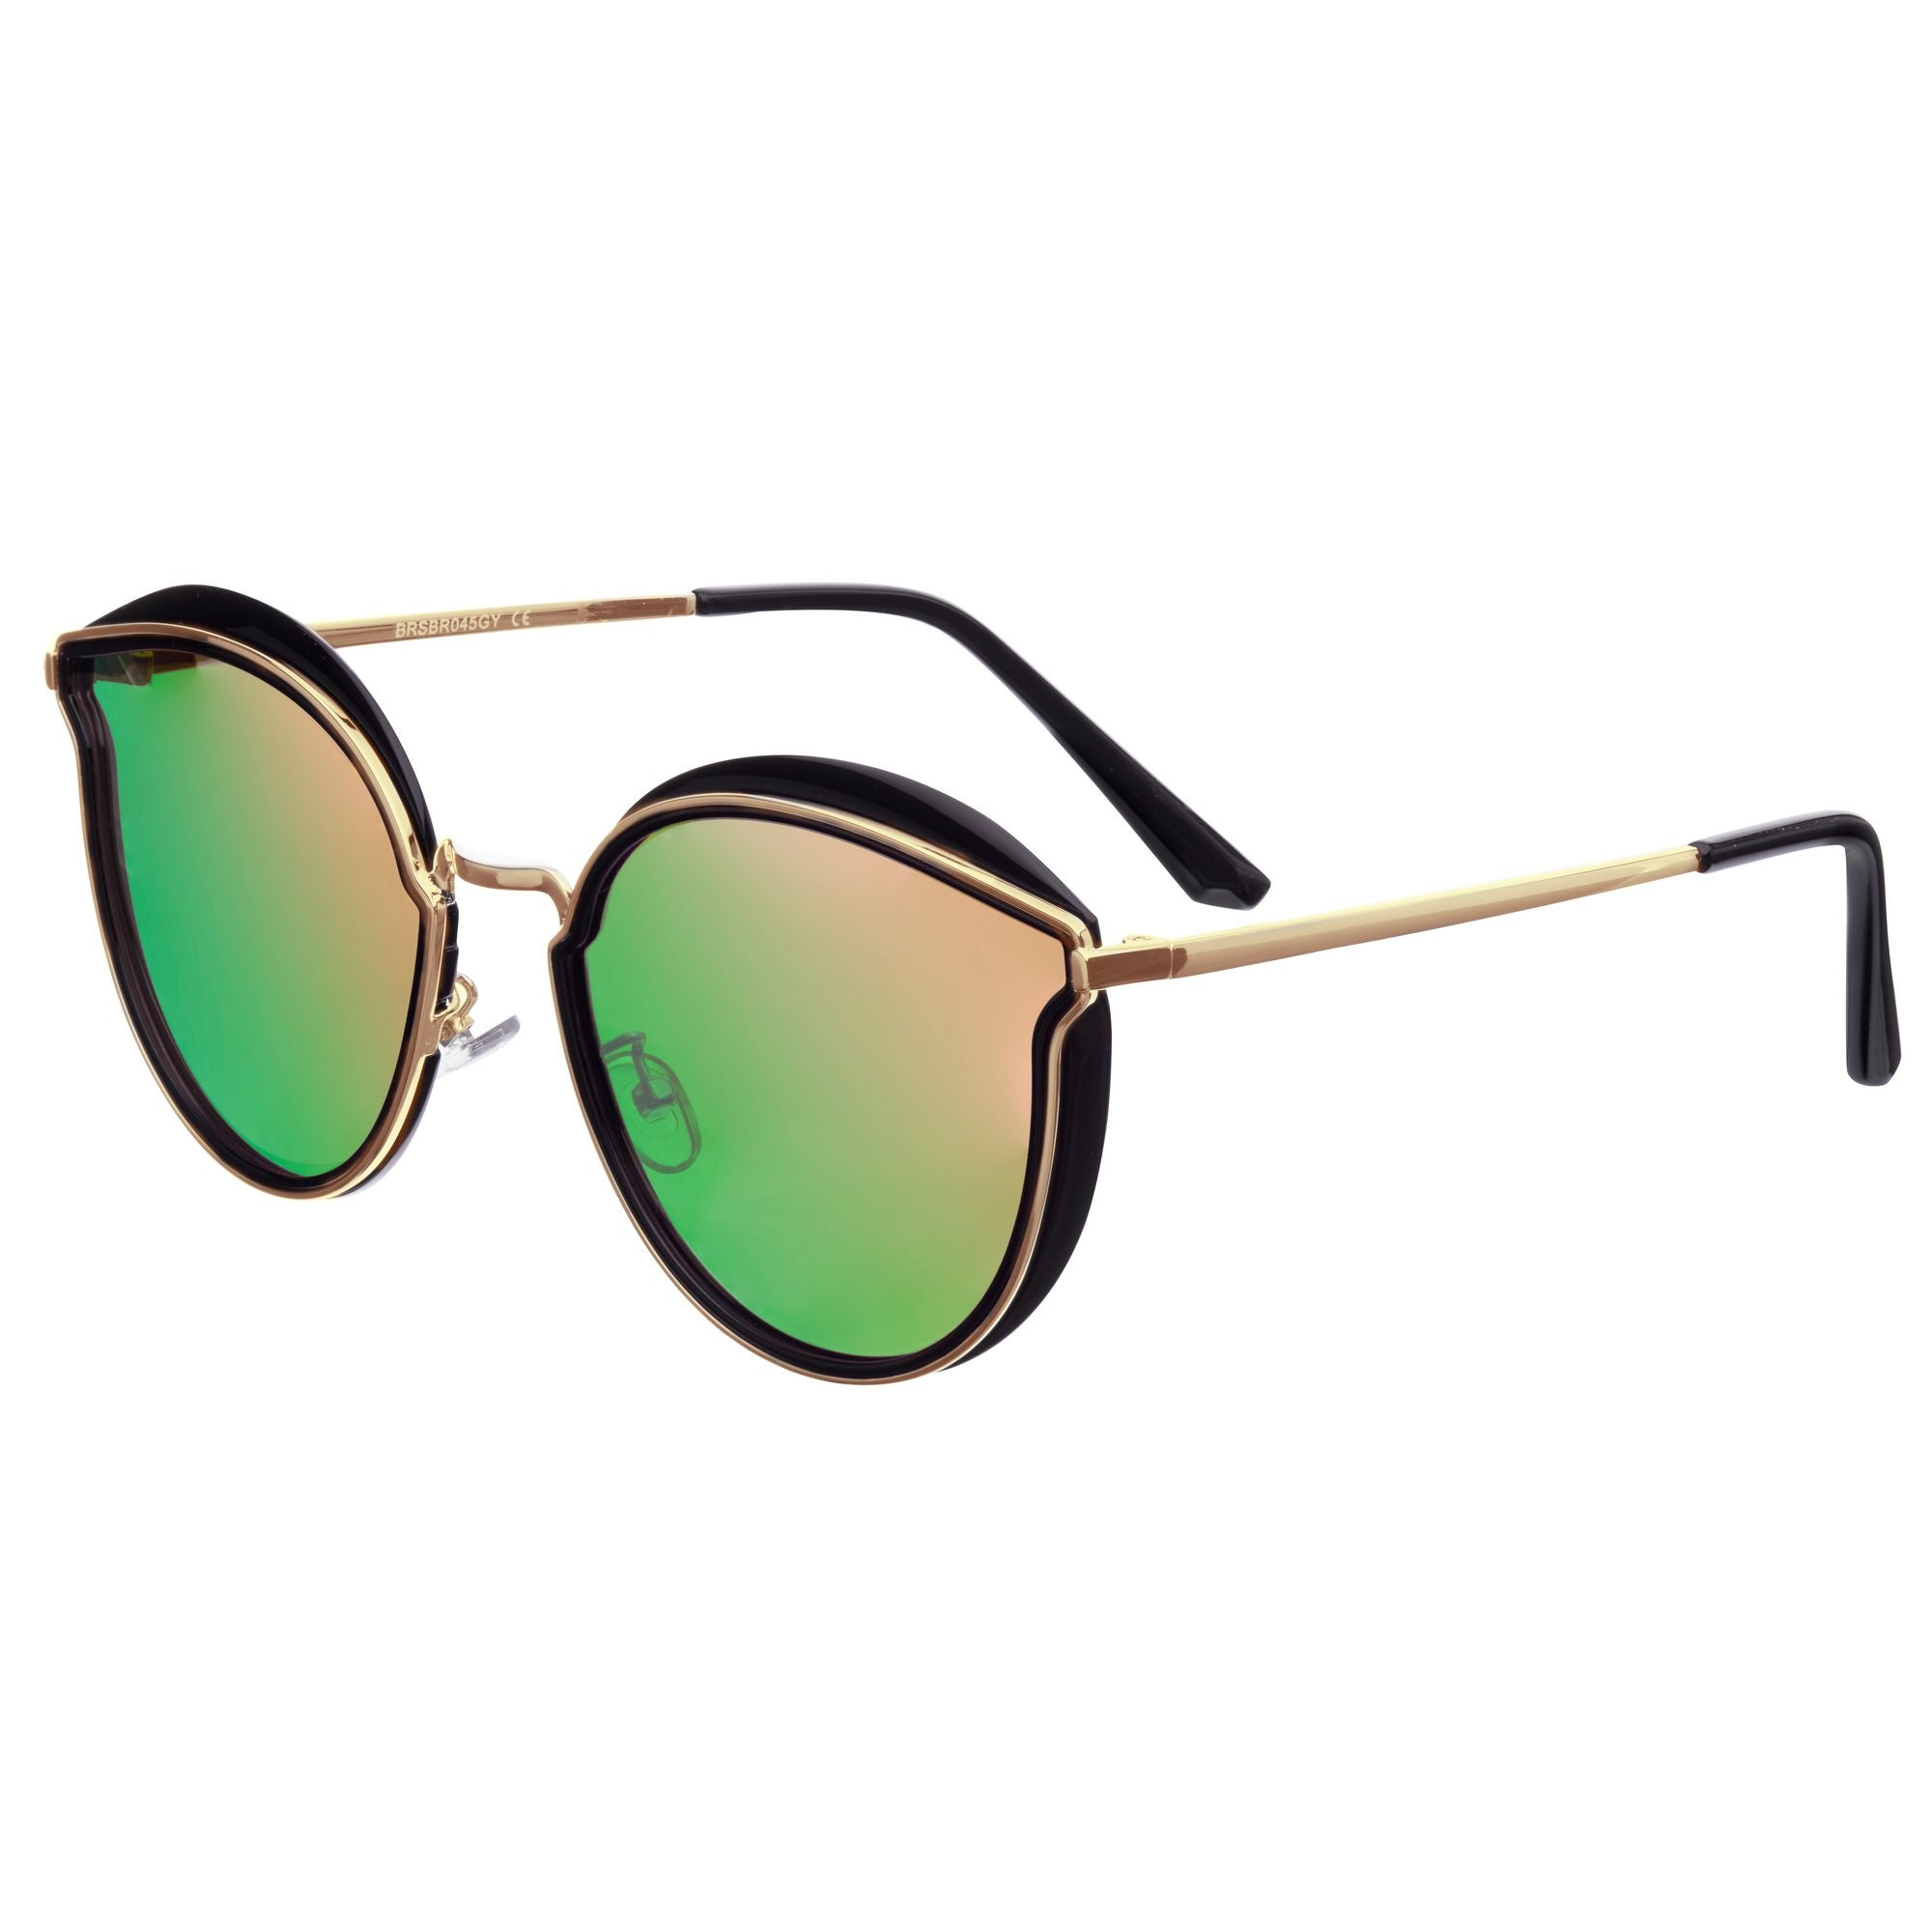 Bertha Lorelei Polarized Sunglasses - Black/Yellow-Green - BRSBR045GY